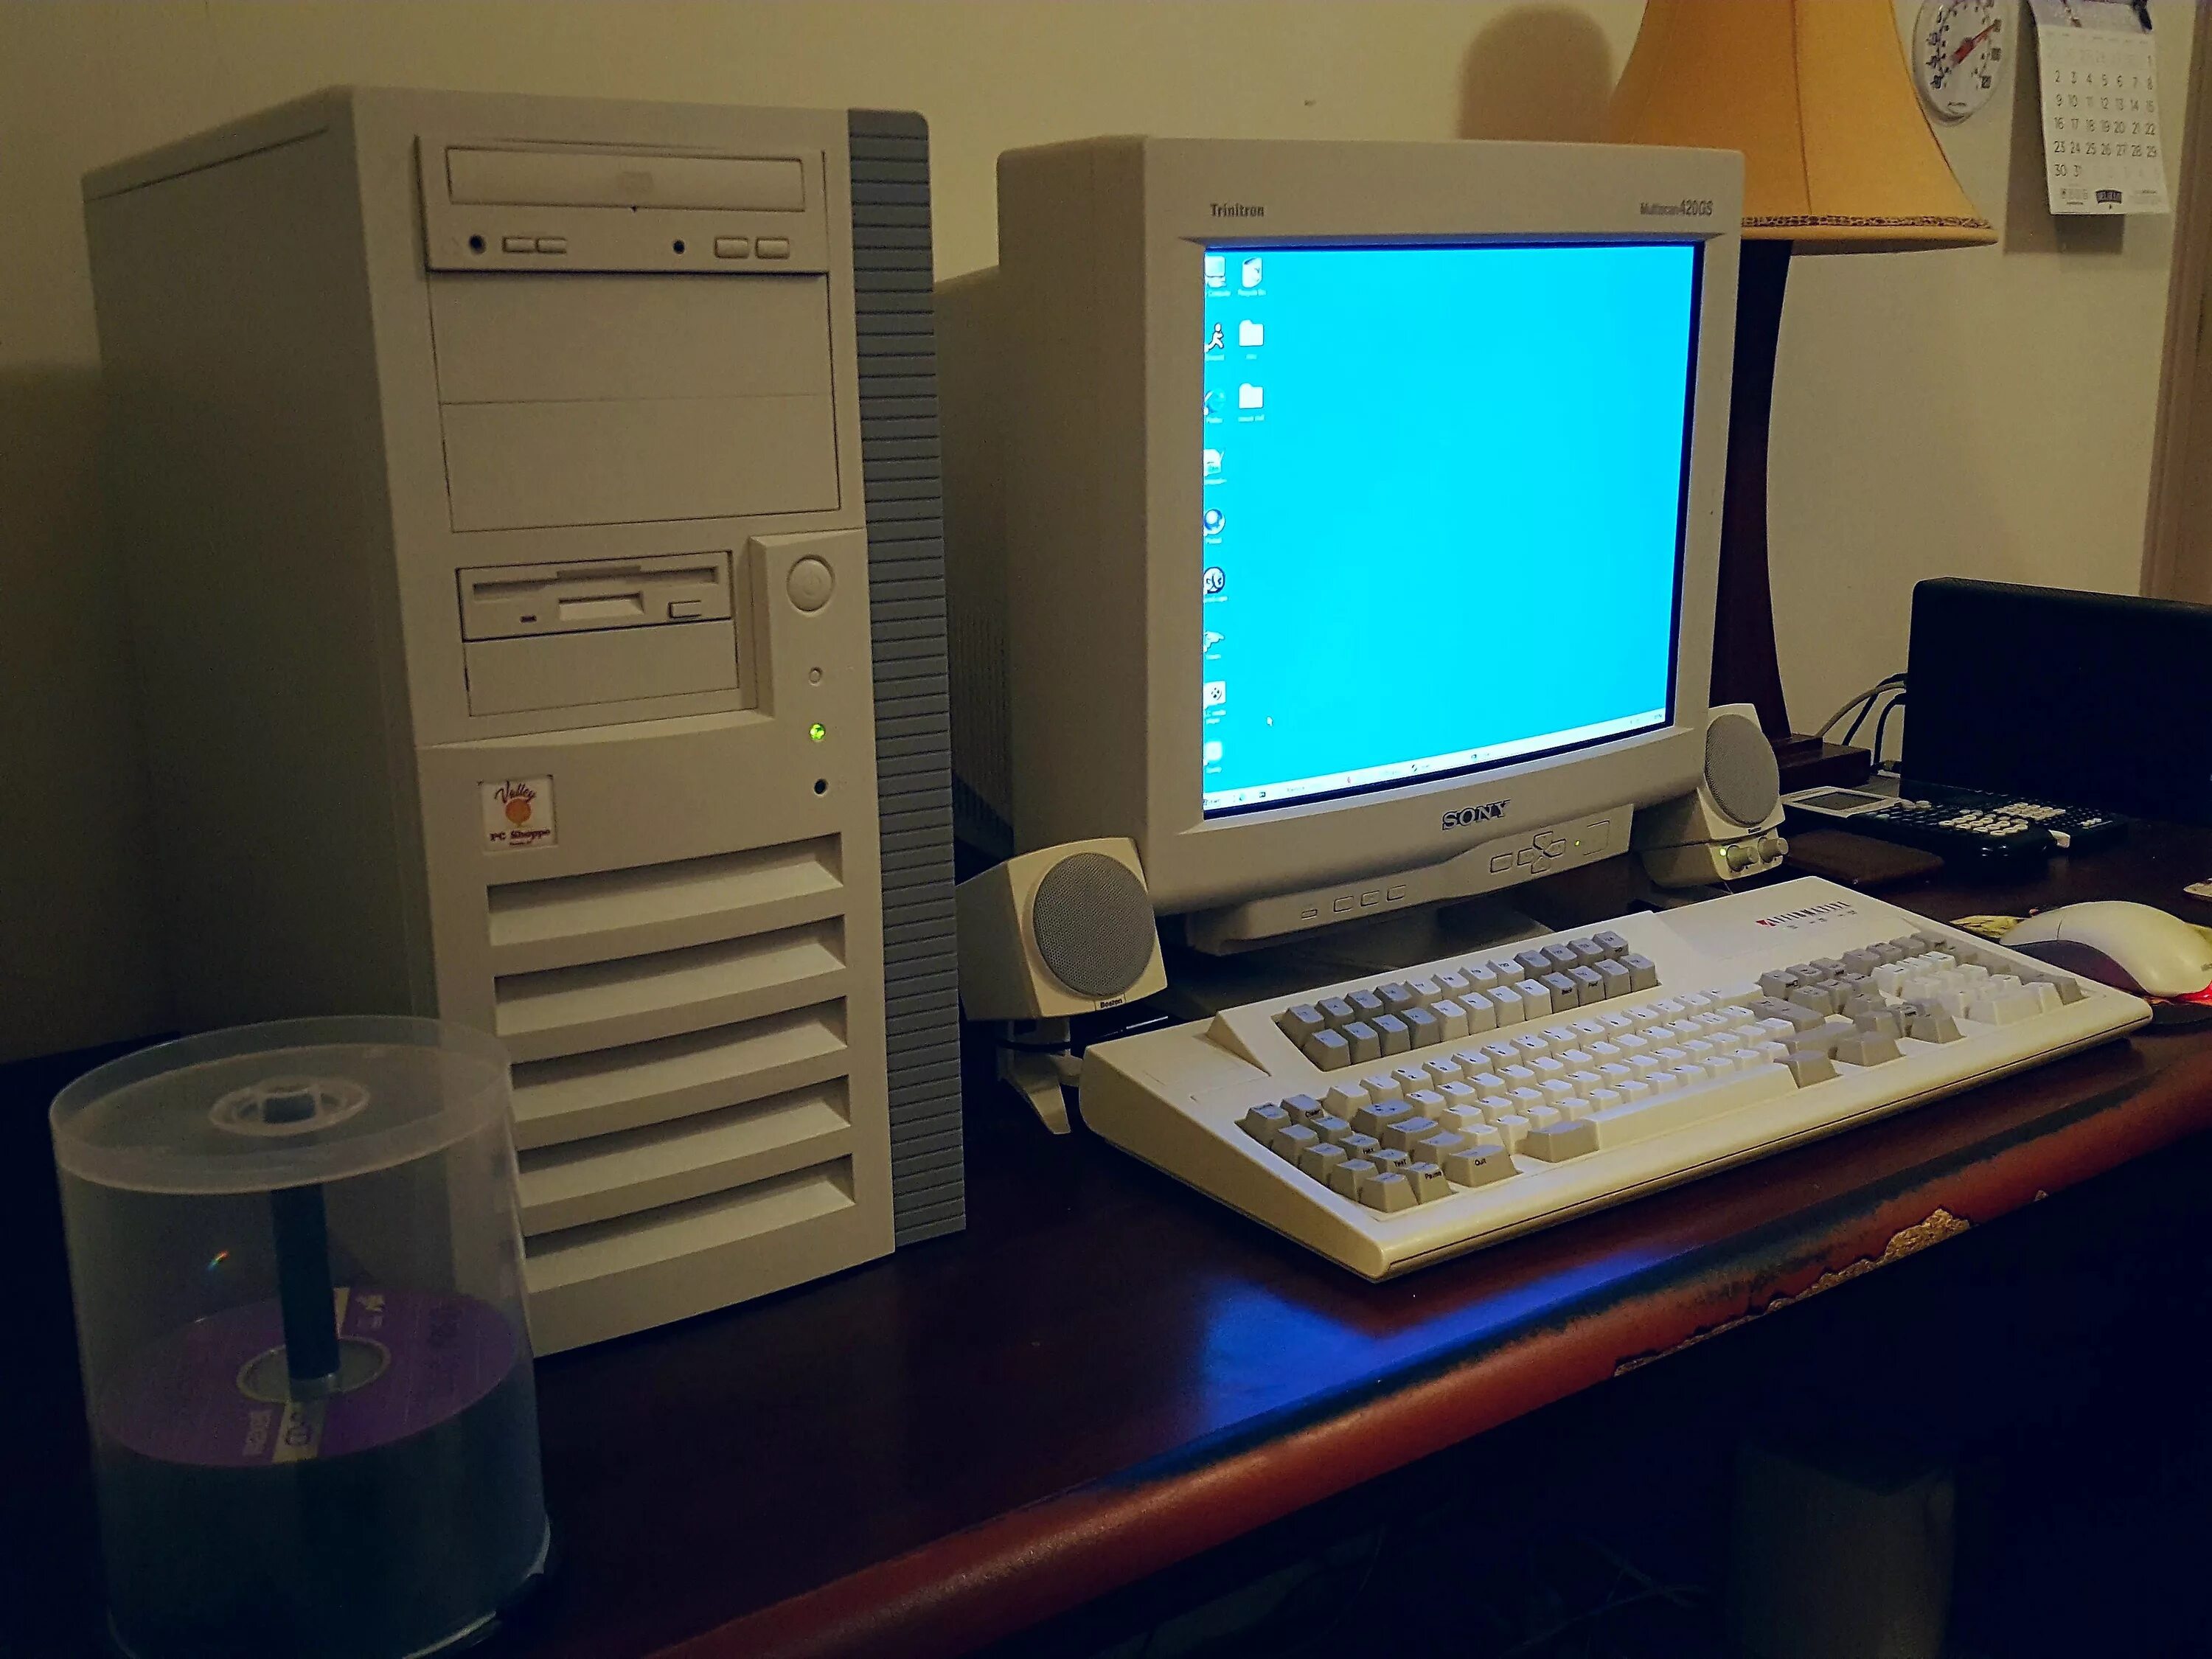 Tried computers. Старый компьютер. Старый офисный компьютер. Стационарный компьютер старый. Компьютер 1999.